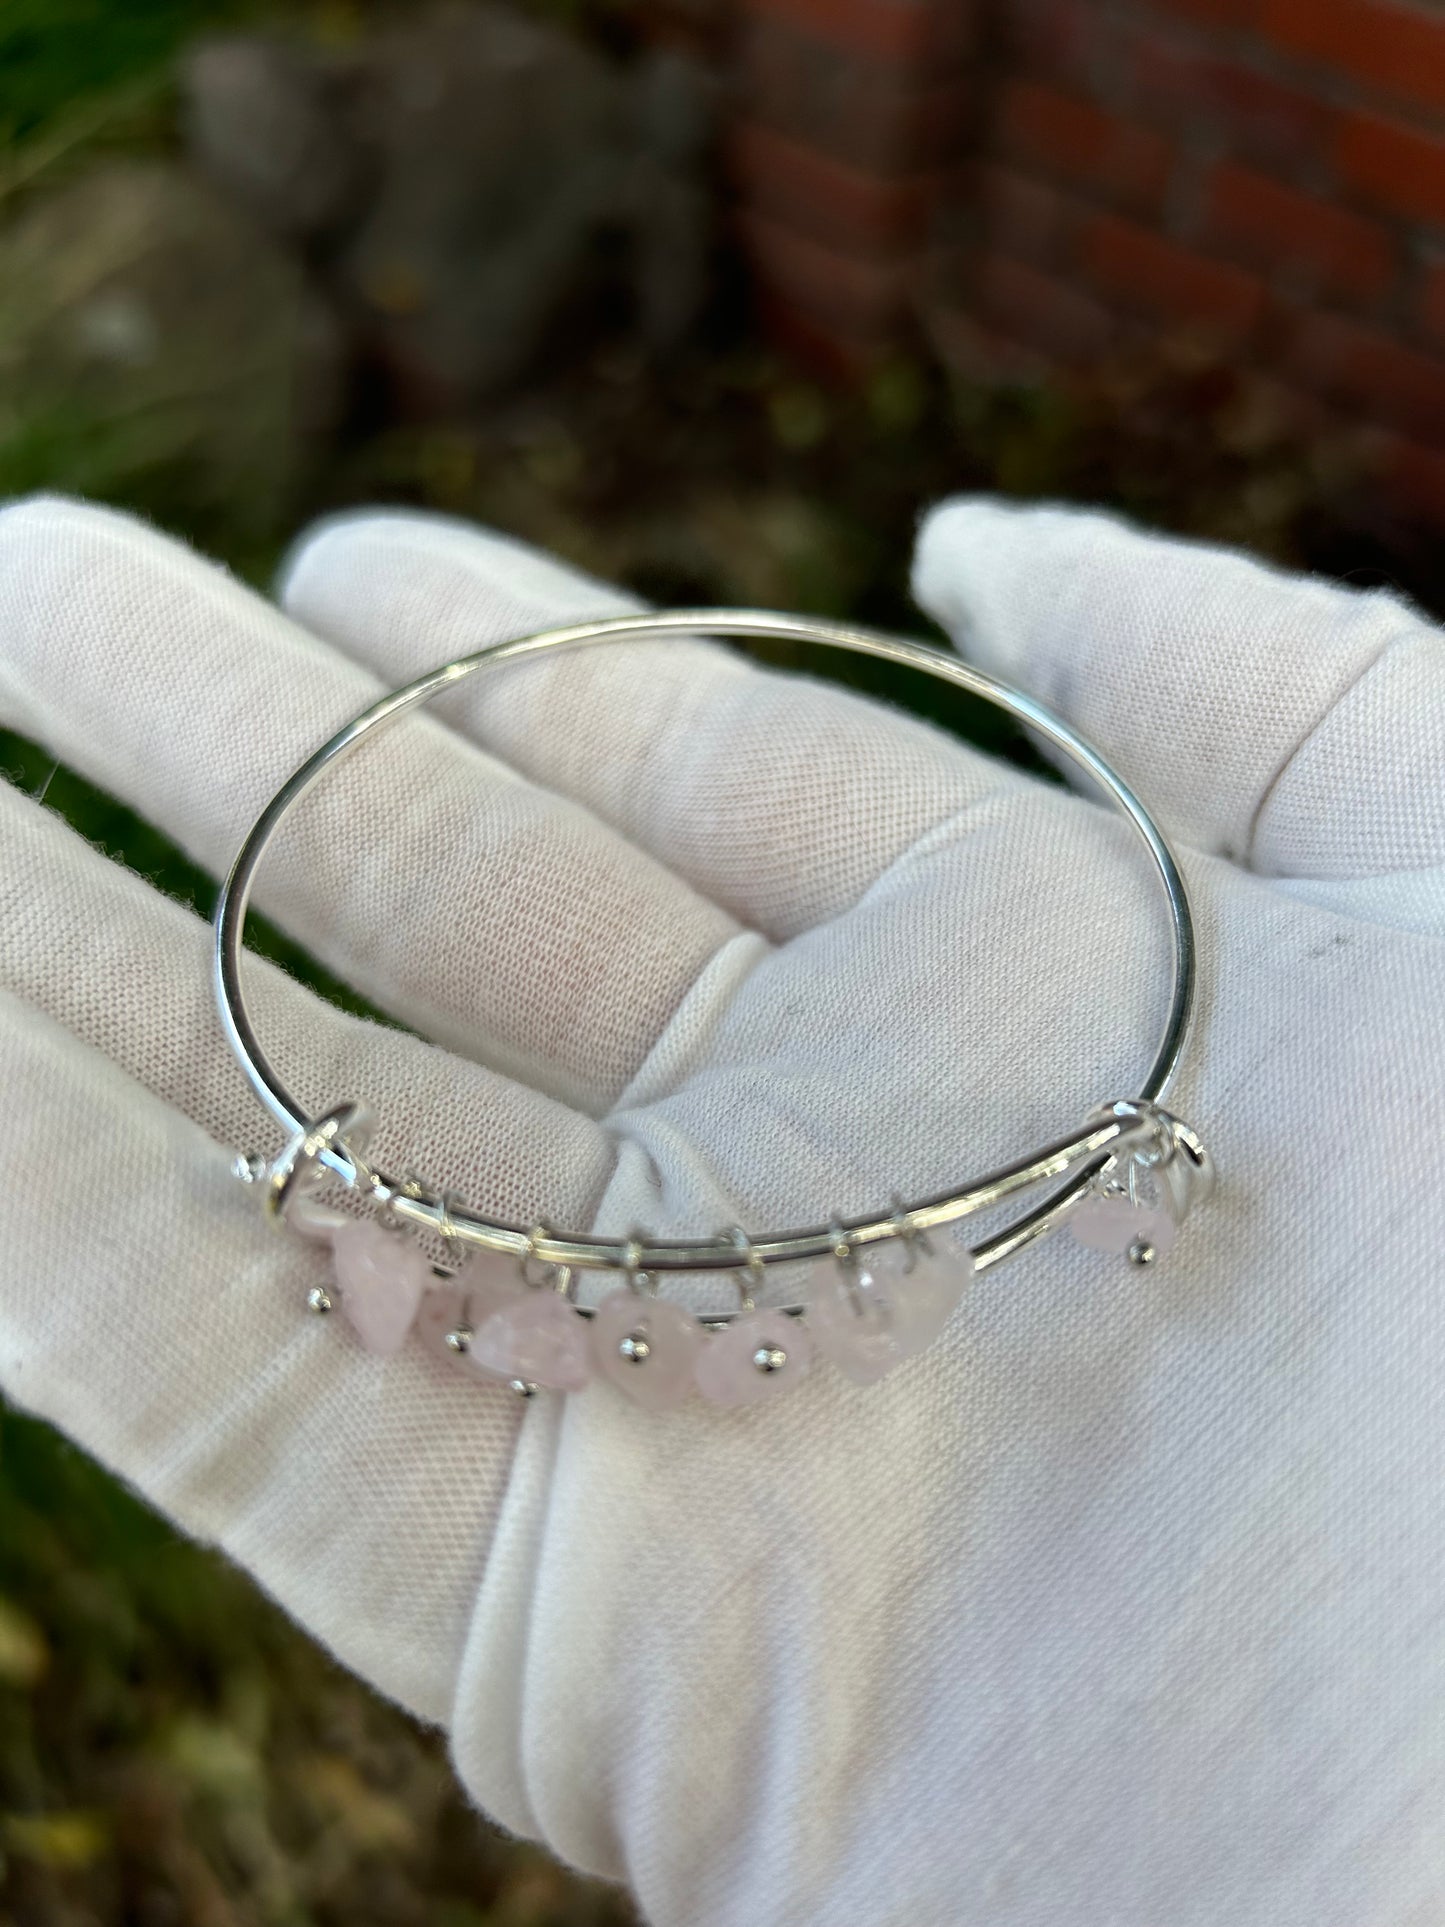 Silver bracelet with rose quartz chips